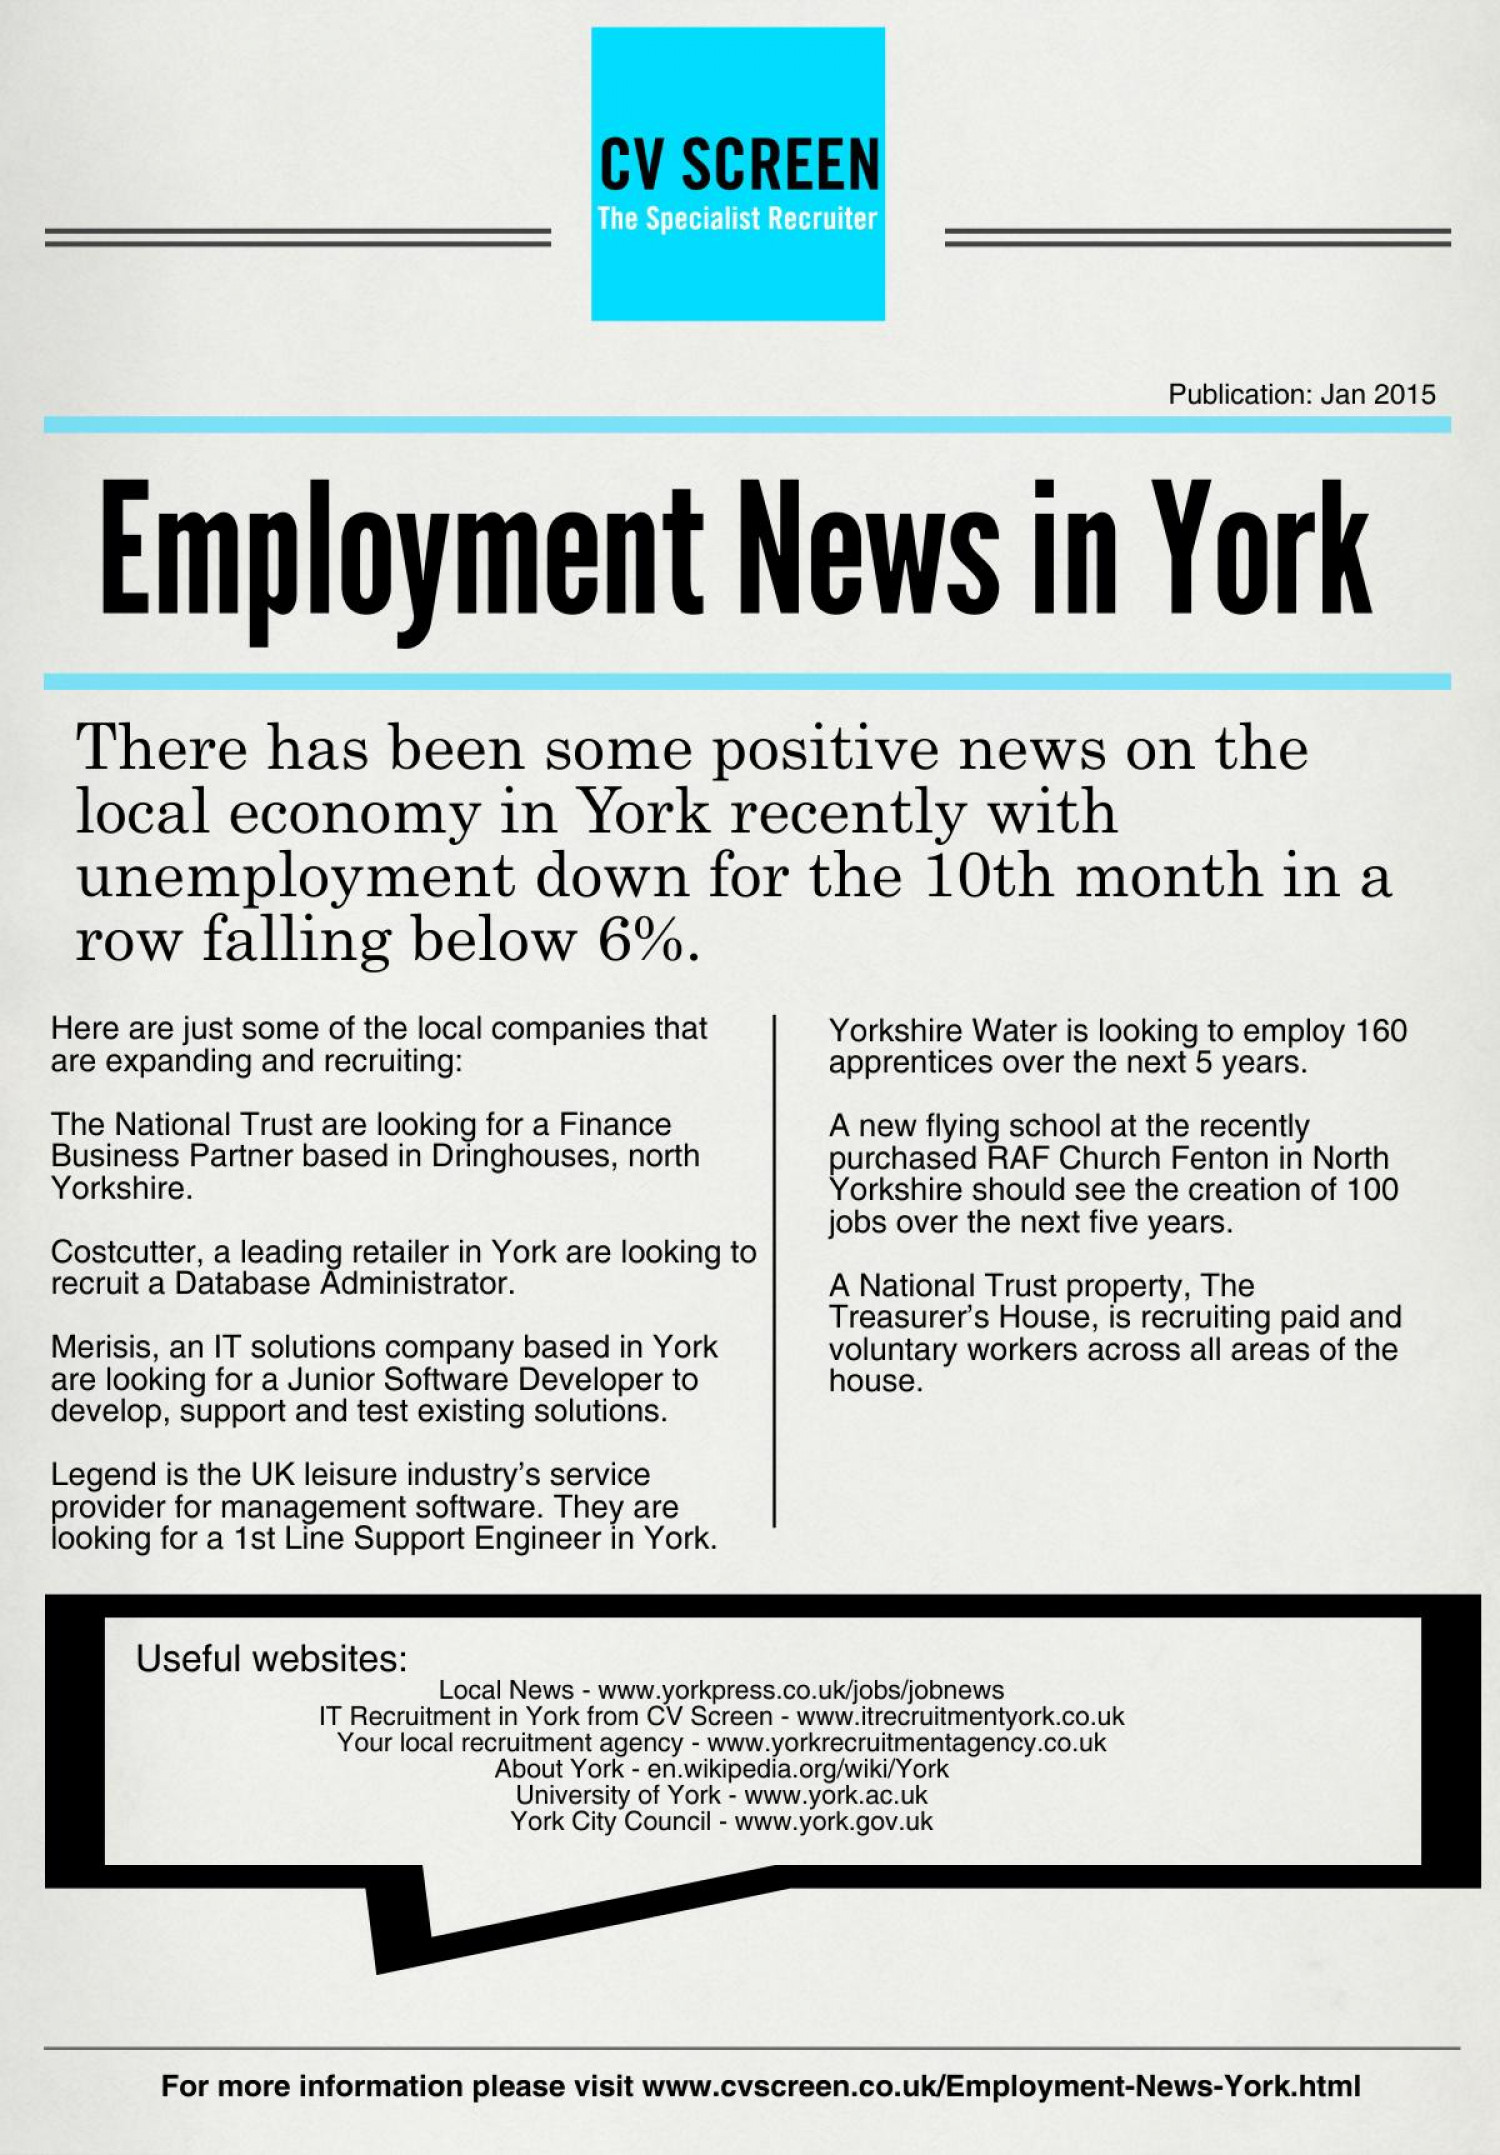 Recruitment News in York Infographic